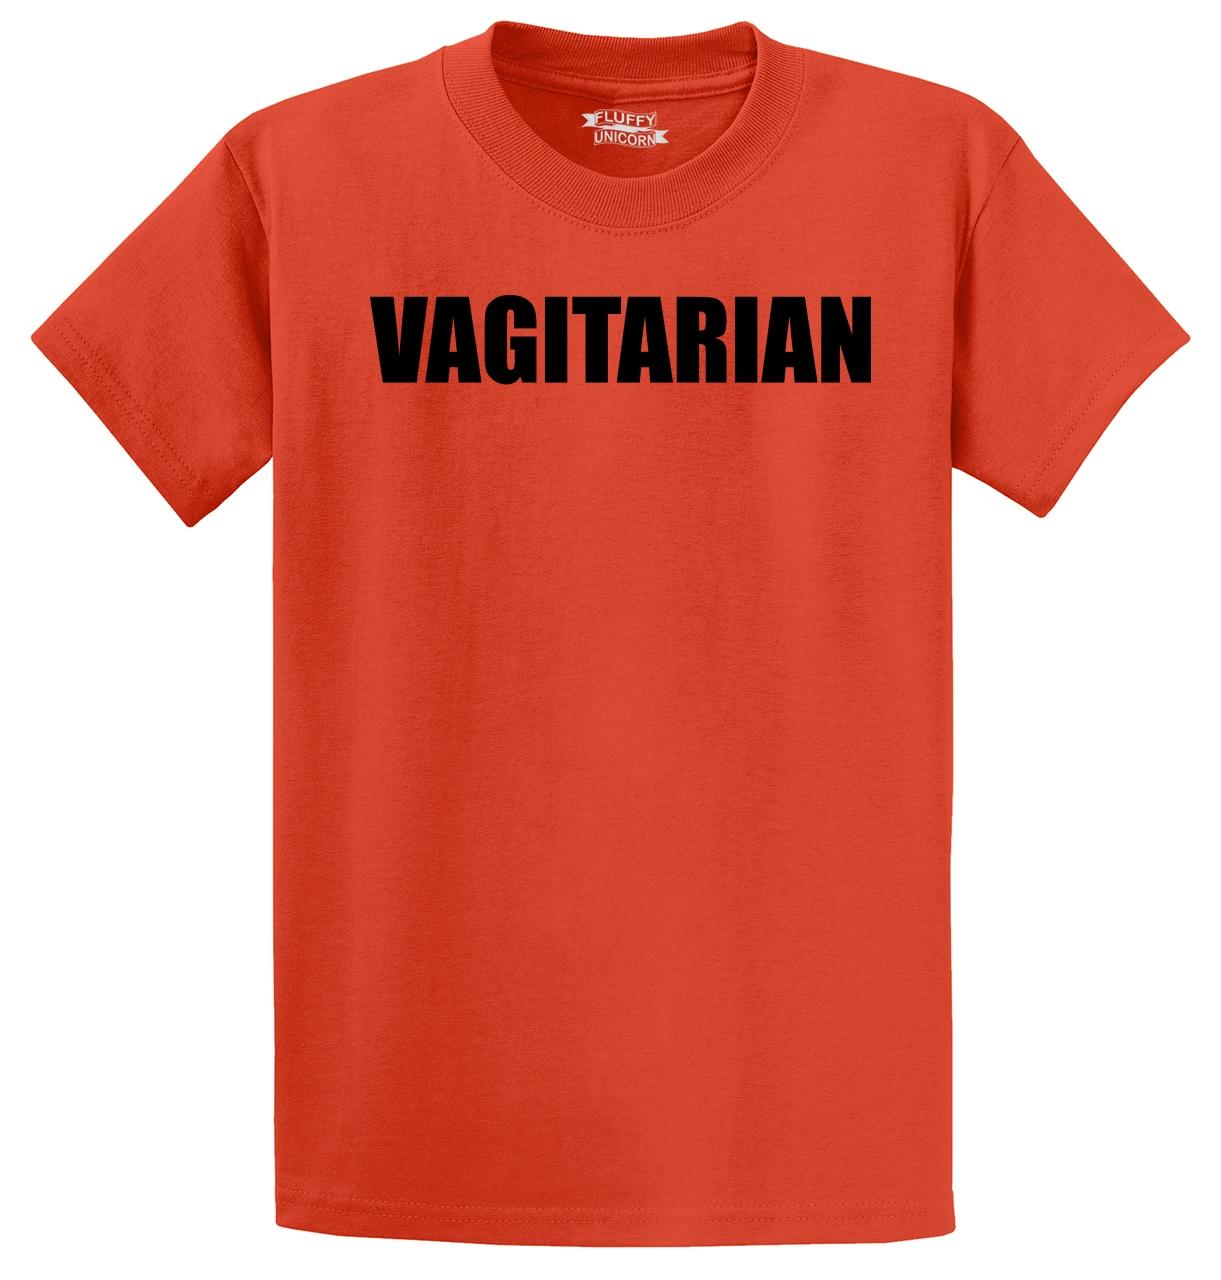 Vagitarian Funny T Shirt Sexual Party Rude Adult Humor Vegetarian Sex